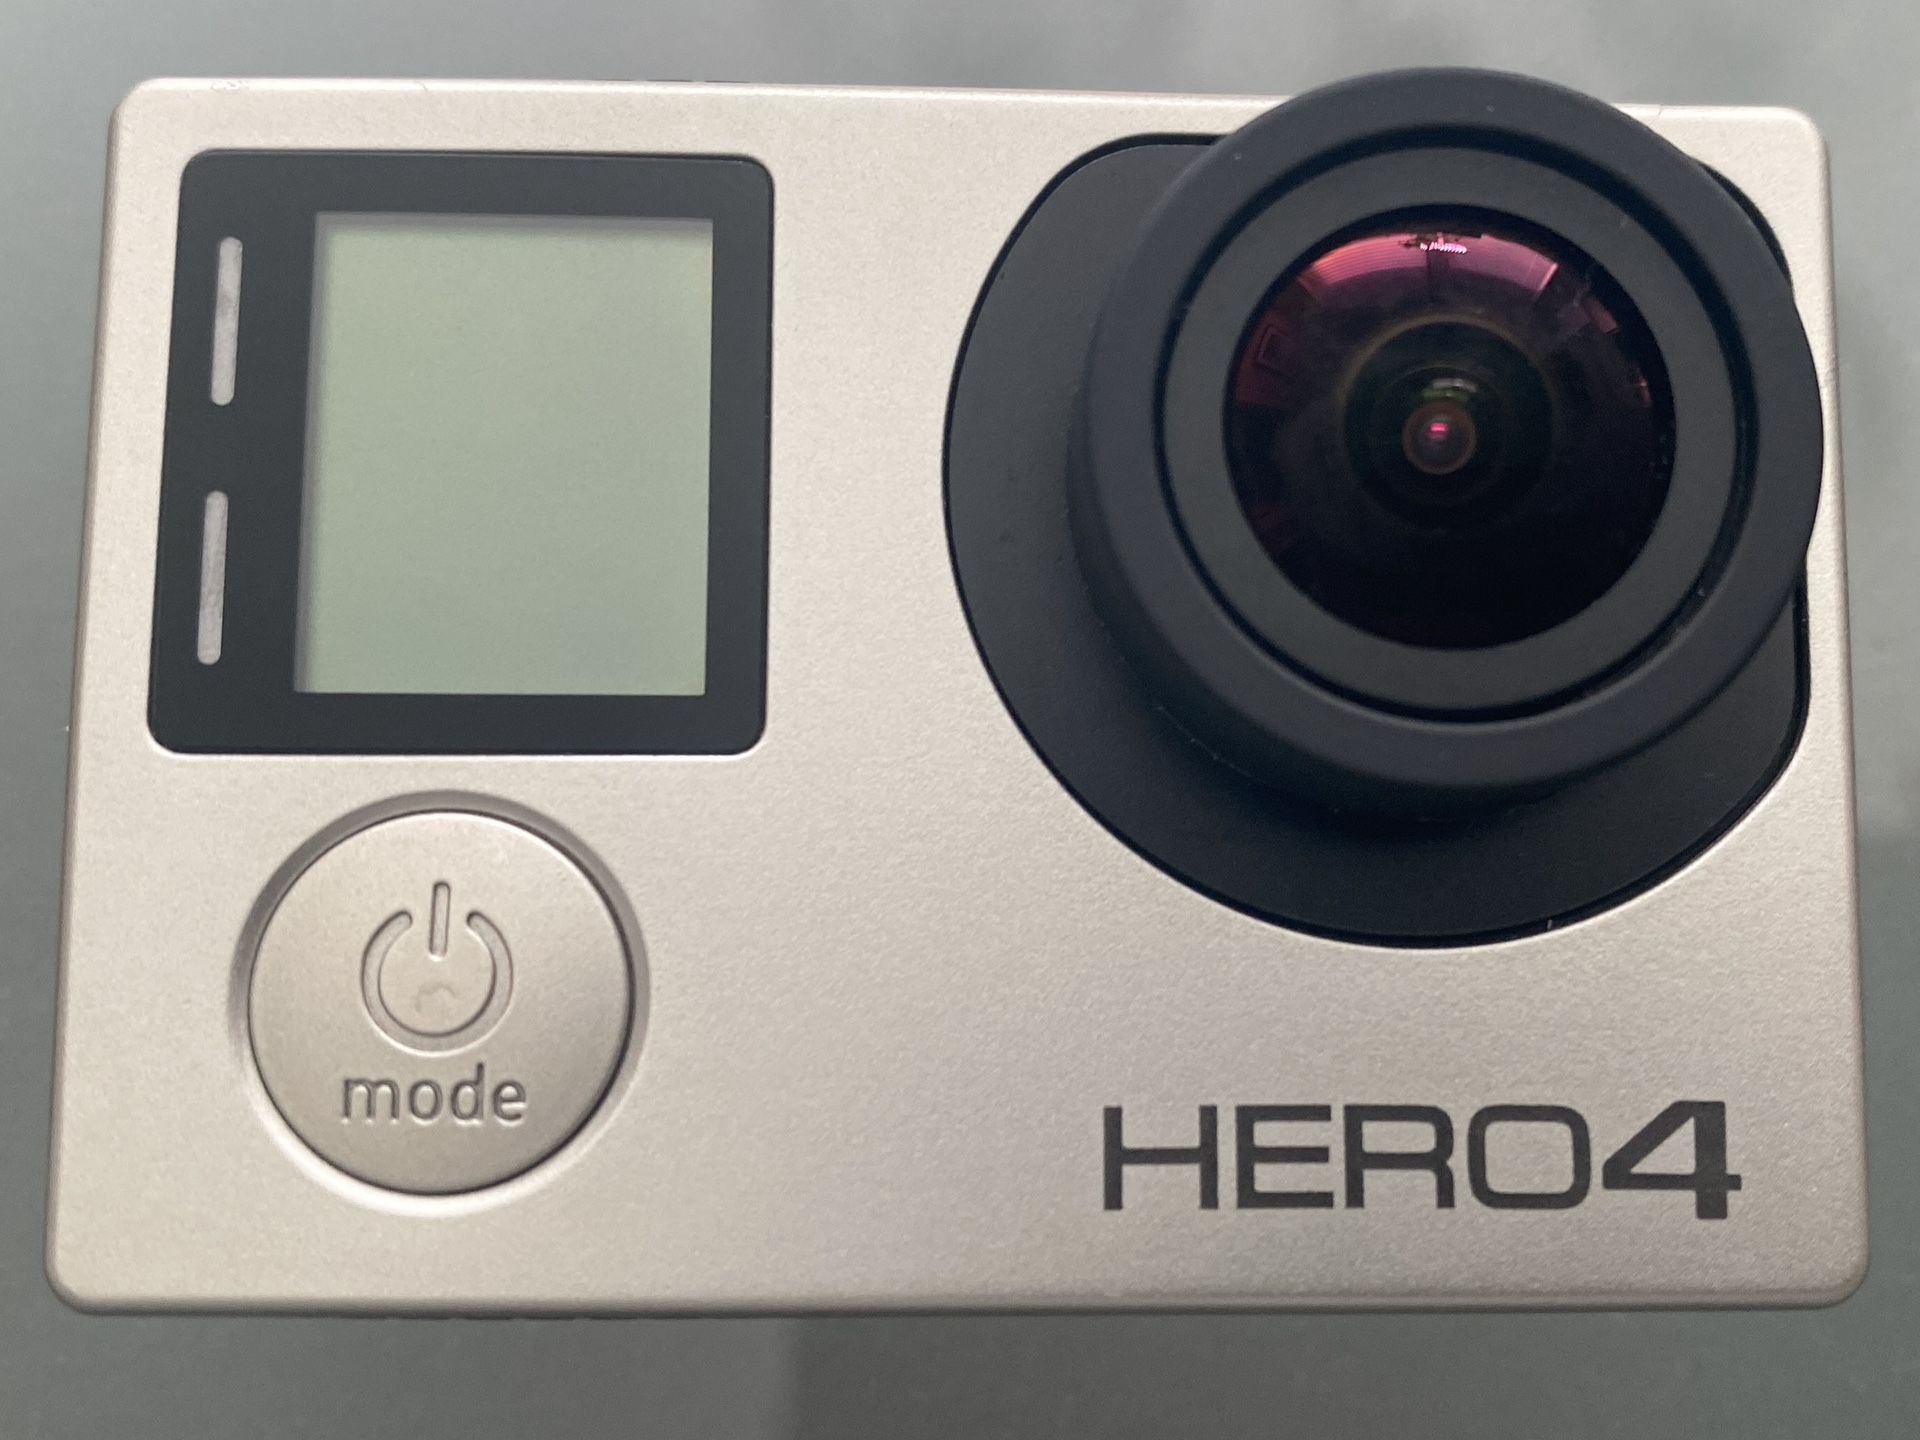 GoPro Hero 4 Silver